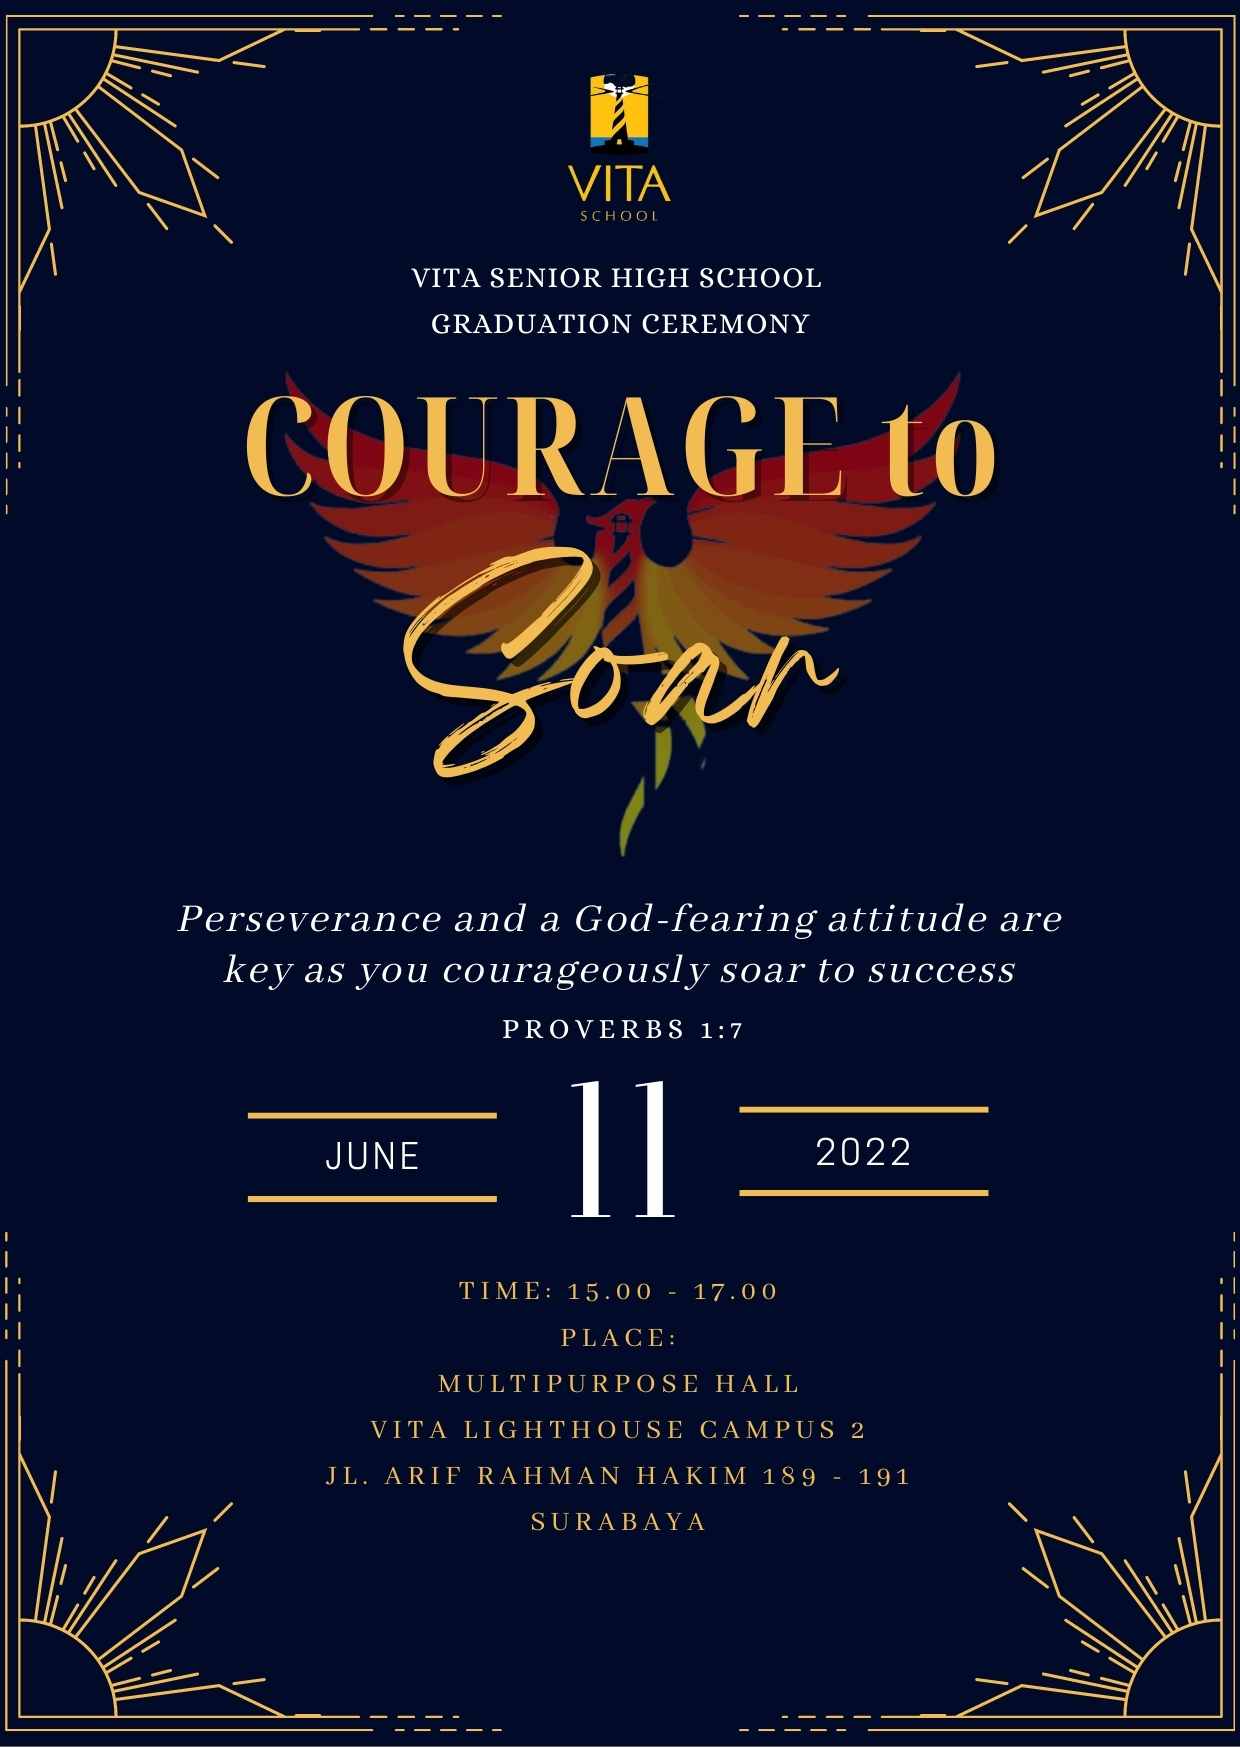 VITA Senior High Graduation Ceremony - Courage to Soar